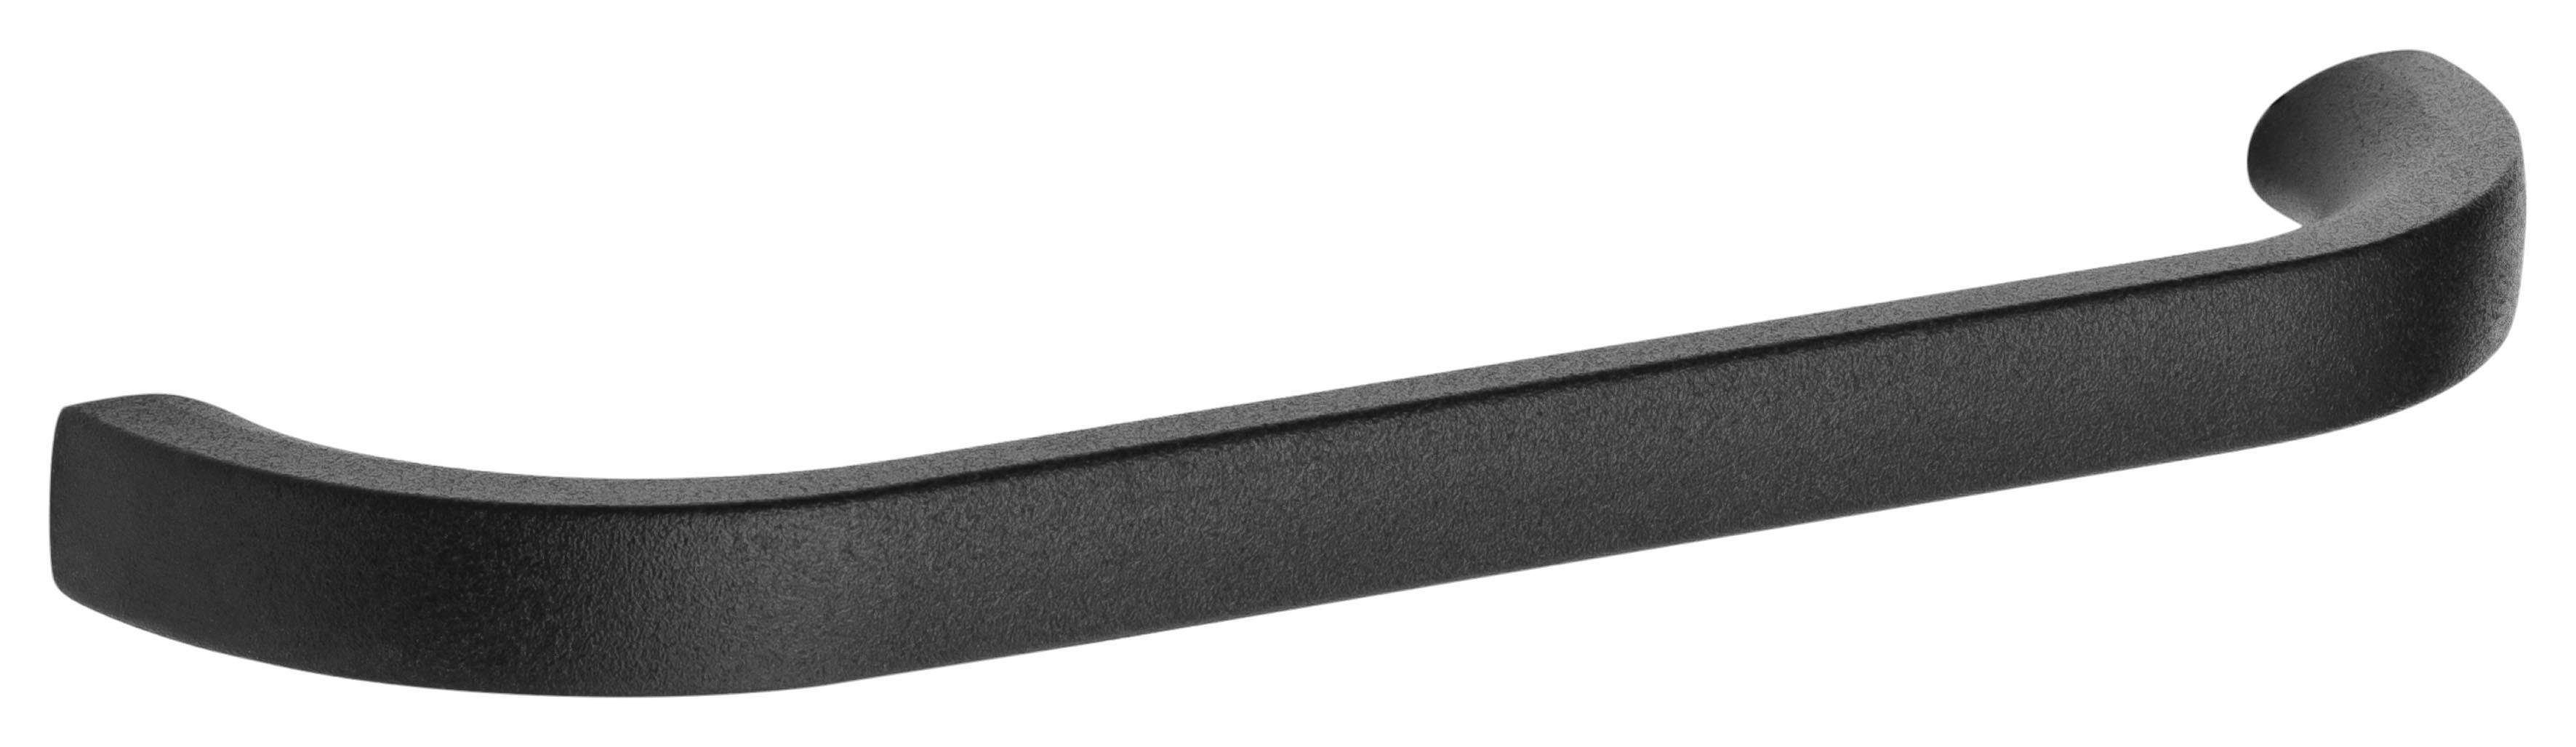 OPTIFIT Kühlumbauschrank Elga mit Soft-Close-Funktion, | 60 Füßen, höhenverstellbaren basaltgrau Breite basaltgrau/basaltgrau cm